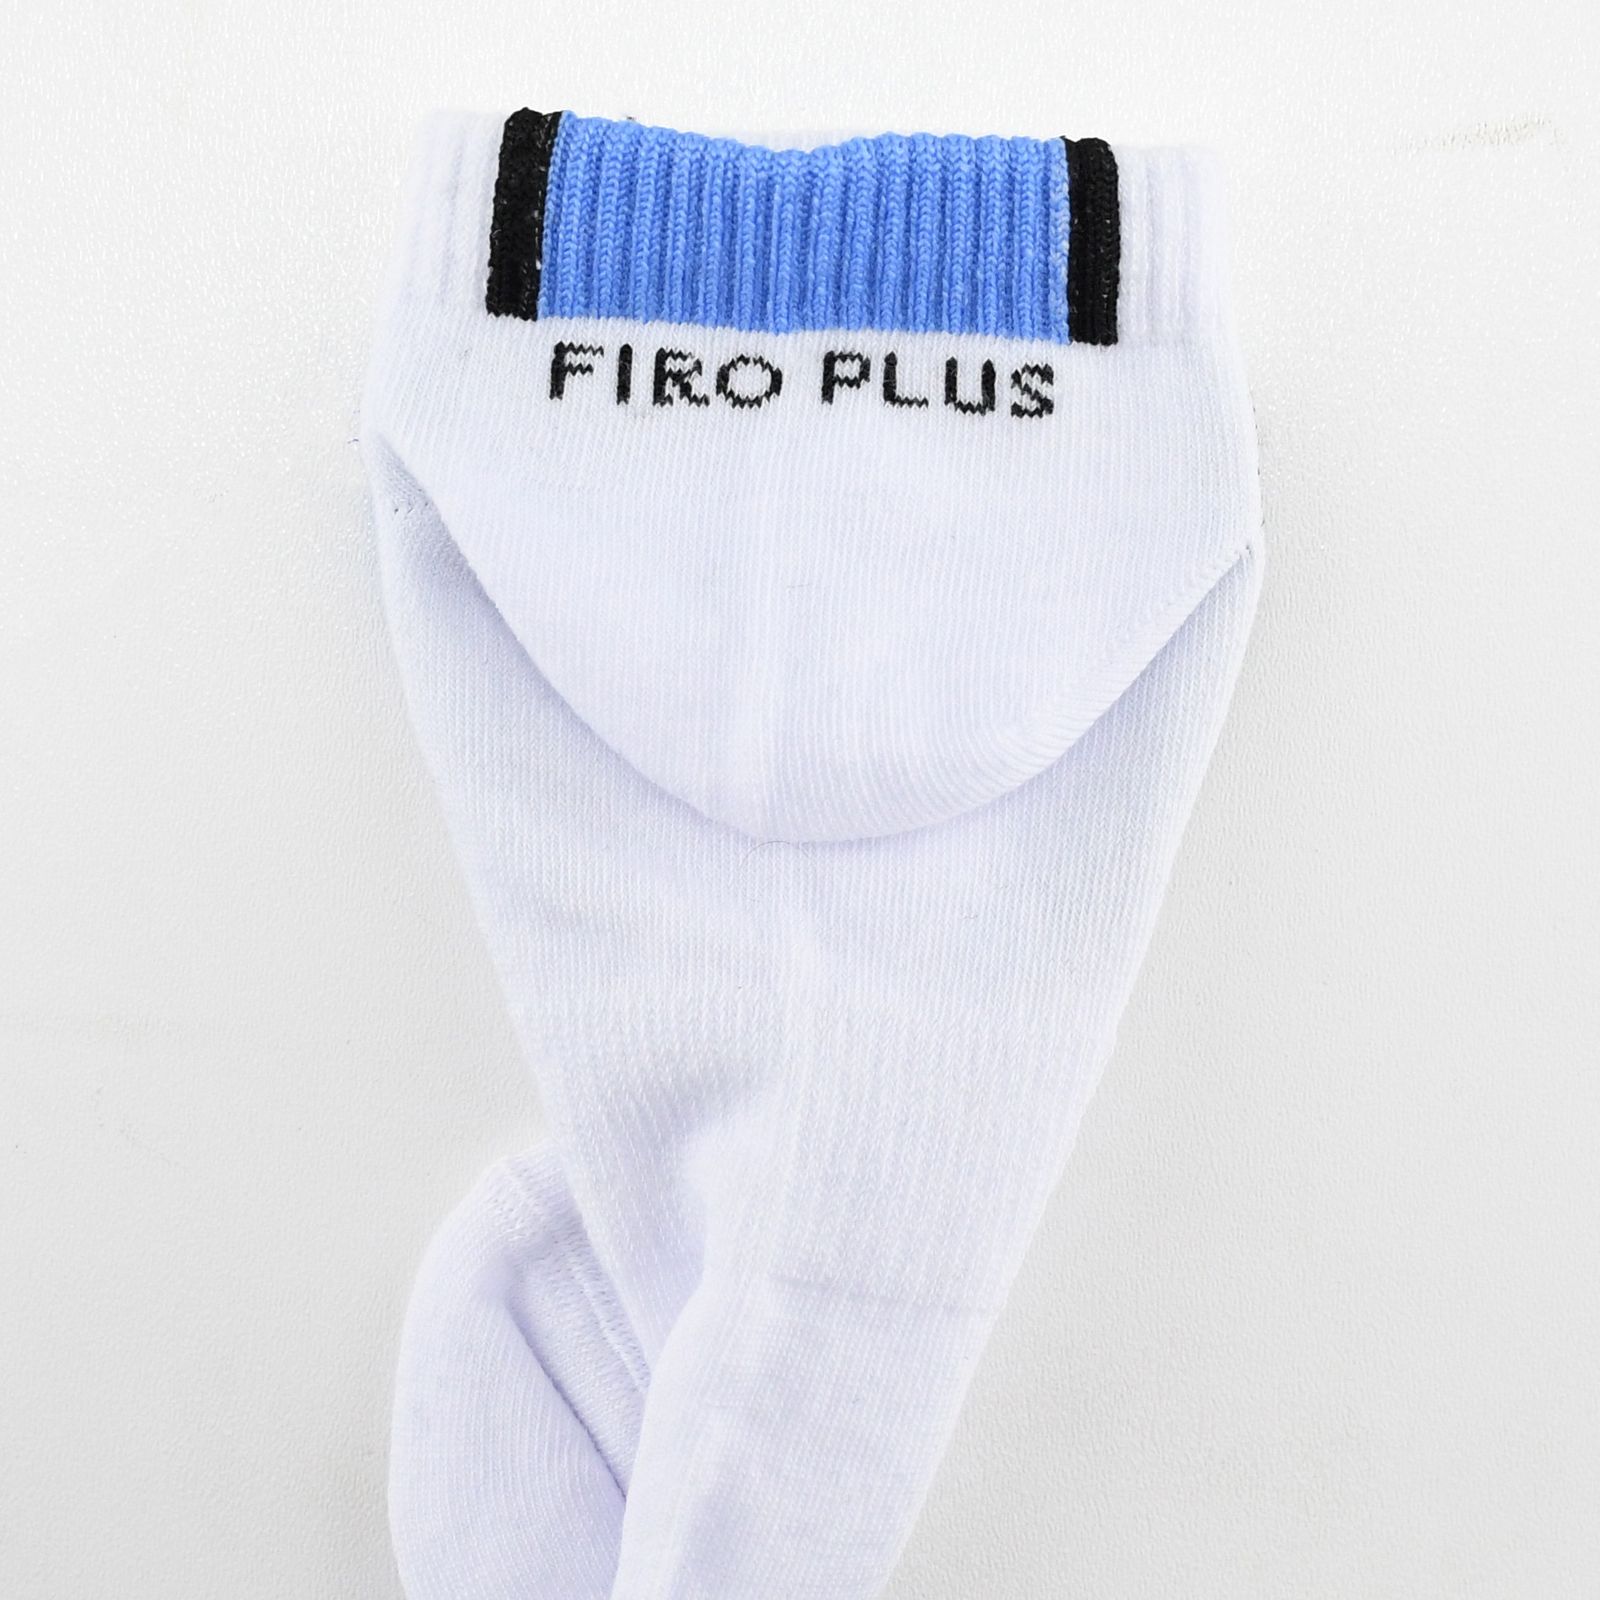 جوراب مردانه فیرو پلاس مدل FP202 مجموعه 3 عددی -  - 6